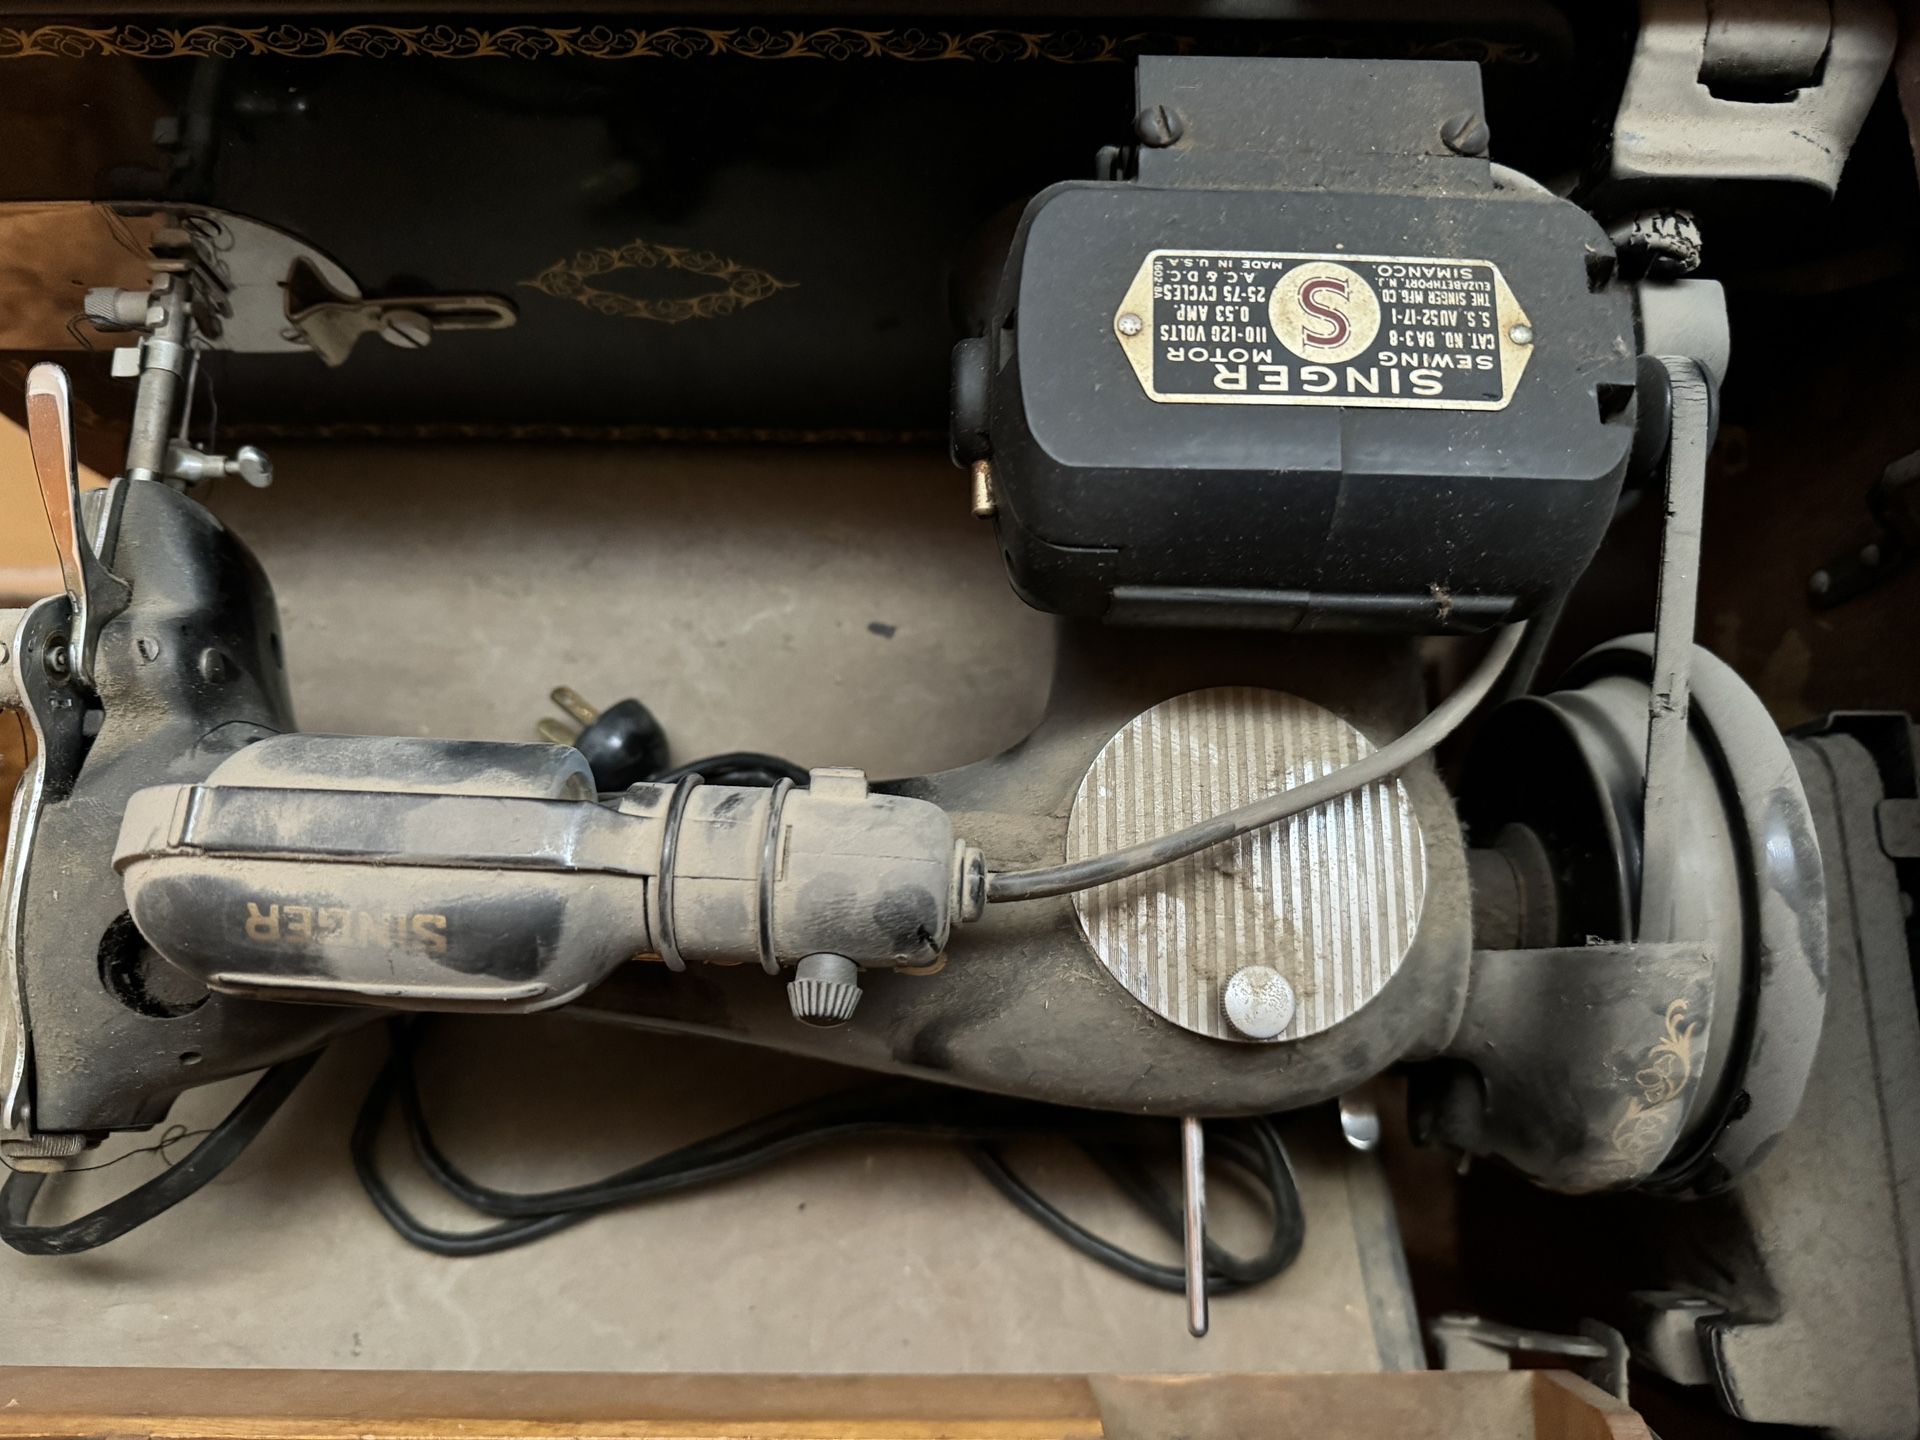 Singer BA 3-8 Antique Sewing machine